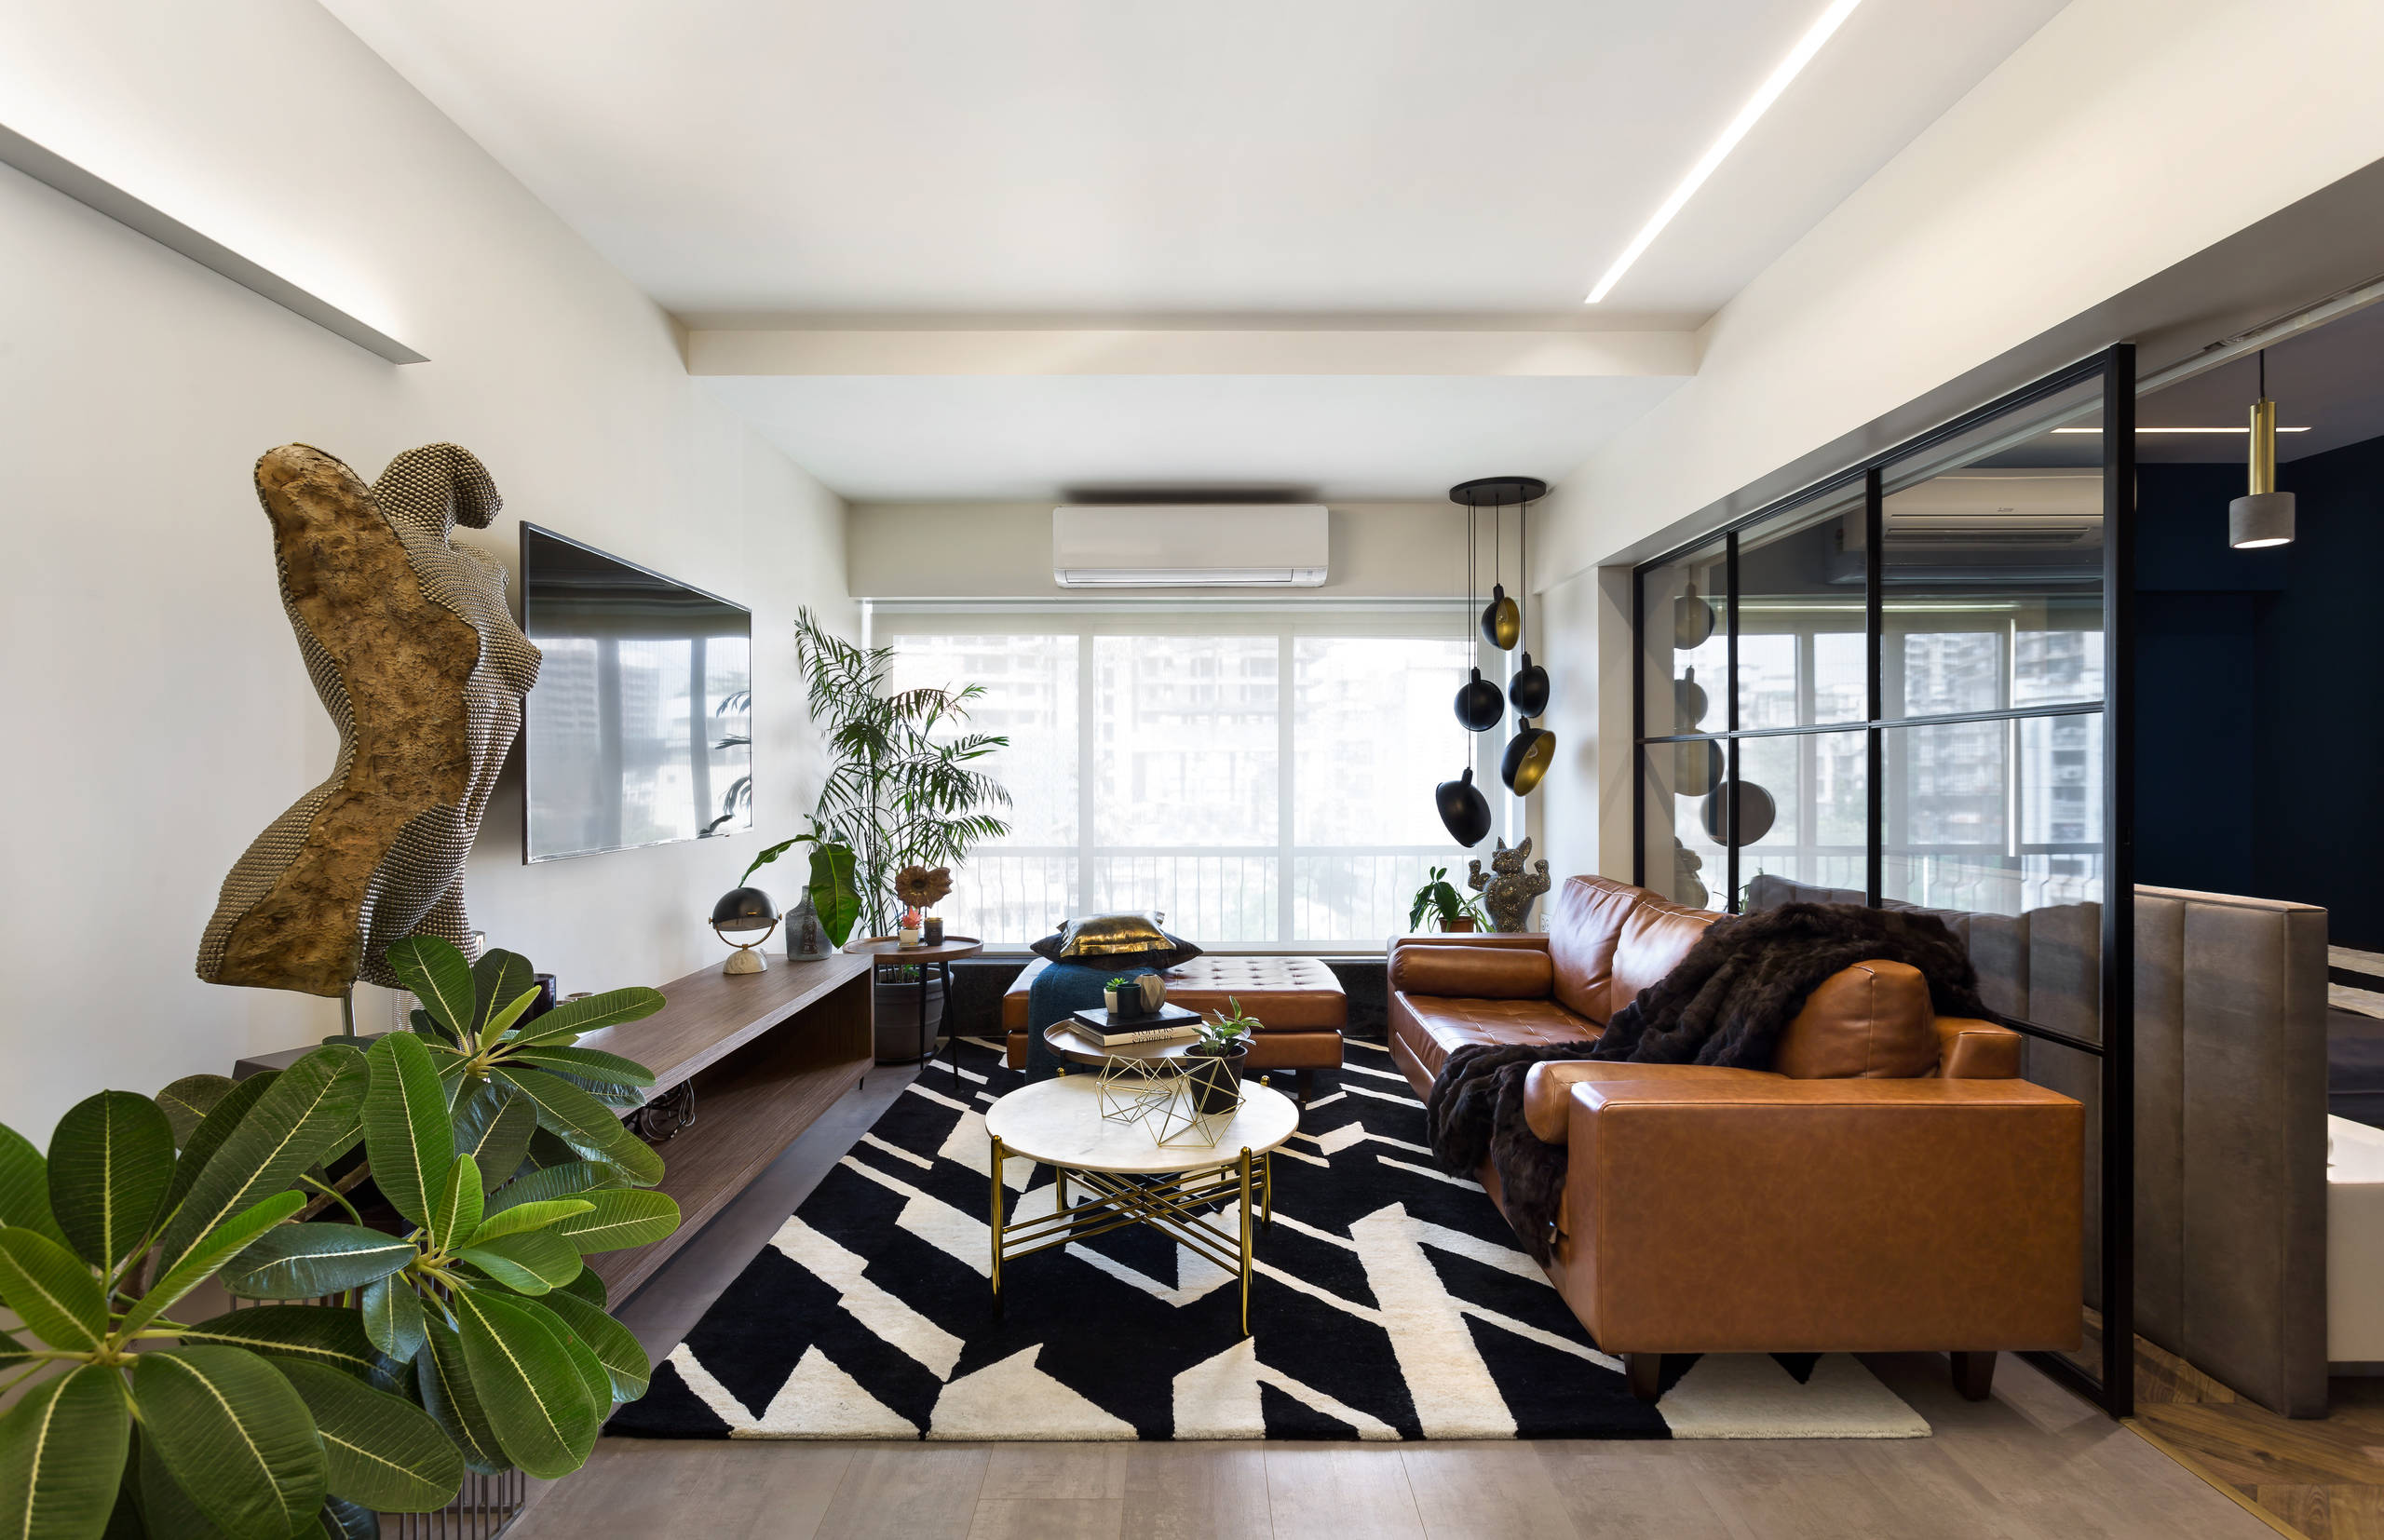 Bachelor Pad - Contemporary - Living Room - Mumbai - by Jason Wadhwani  Design Studio | Houzz